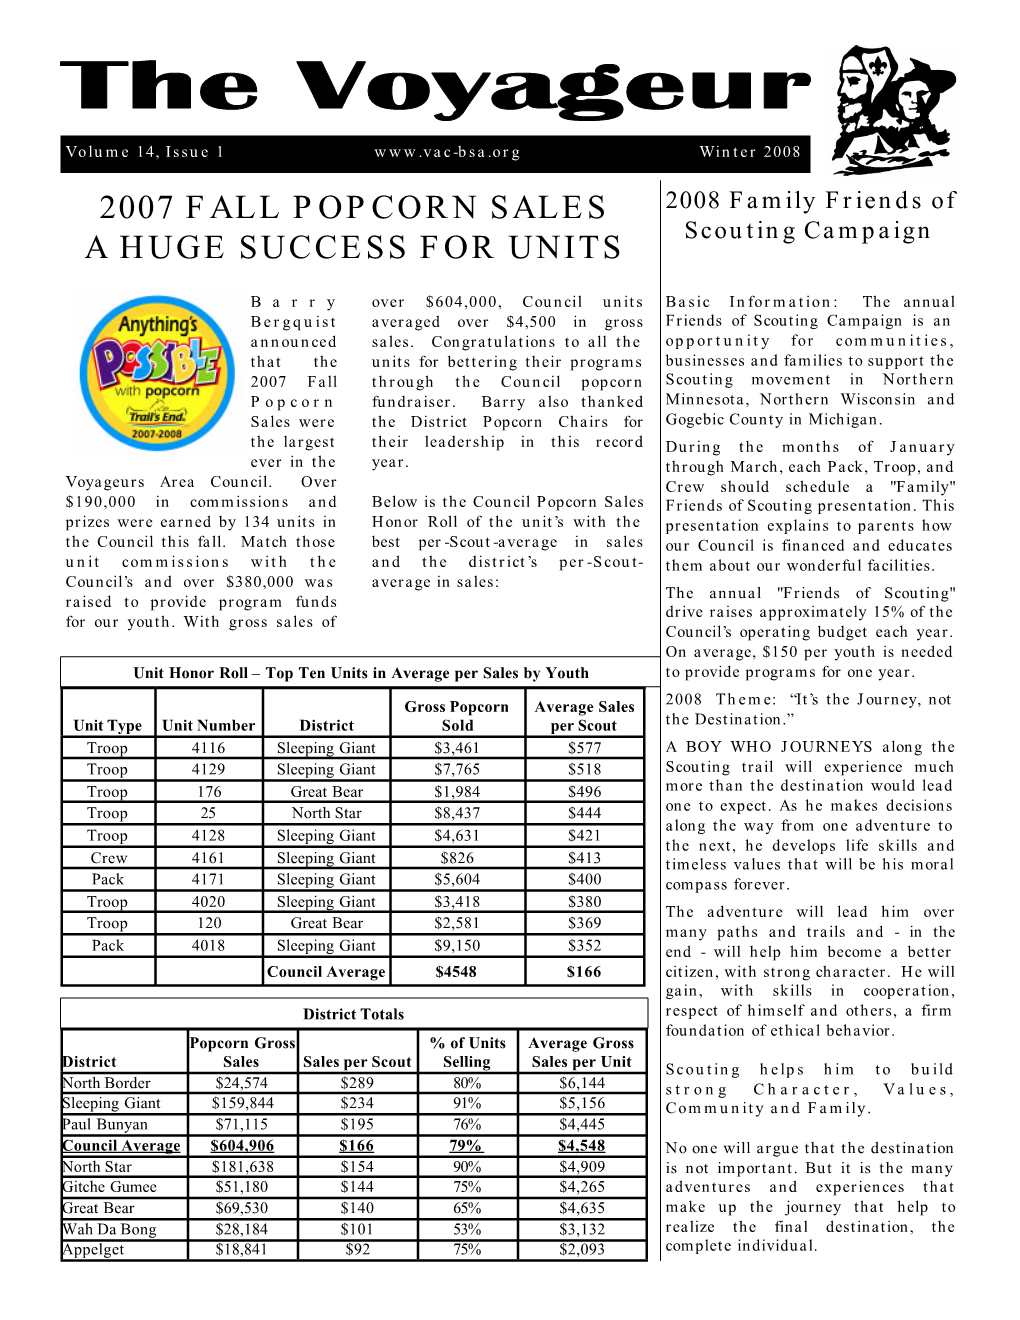 2007 Fall Popcorn Sales a Huge